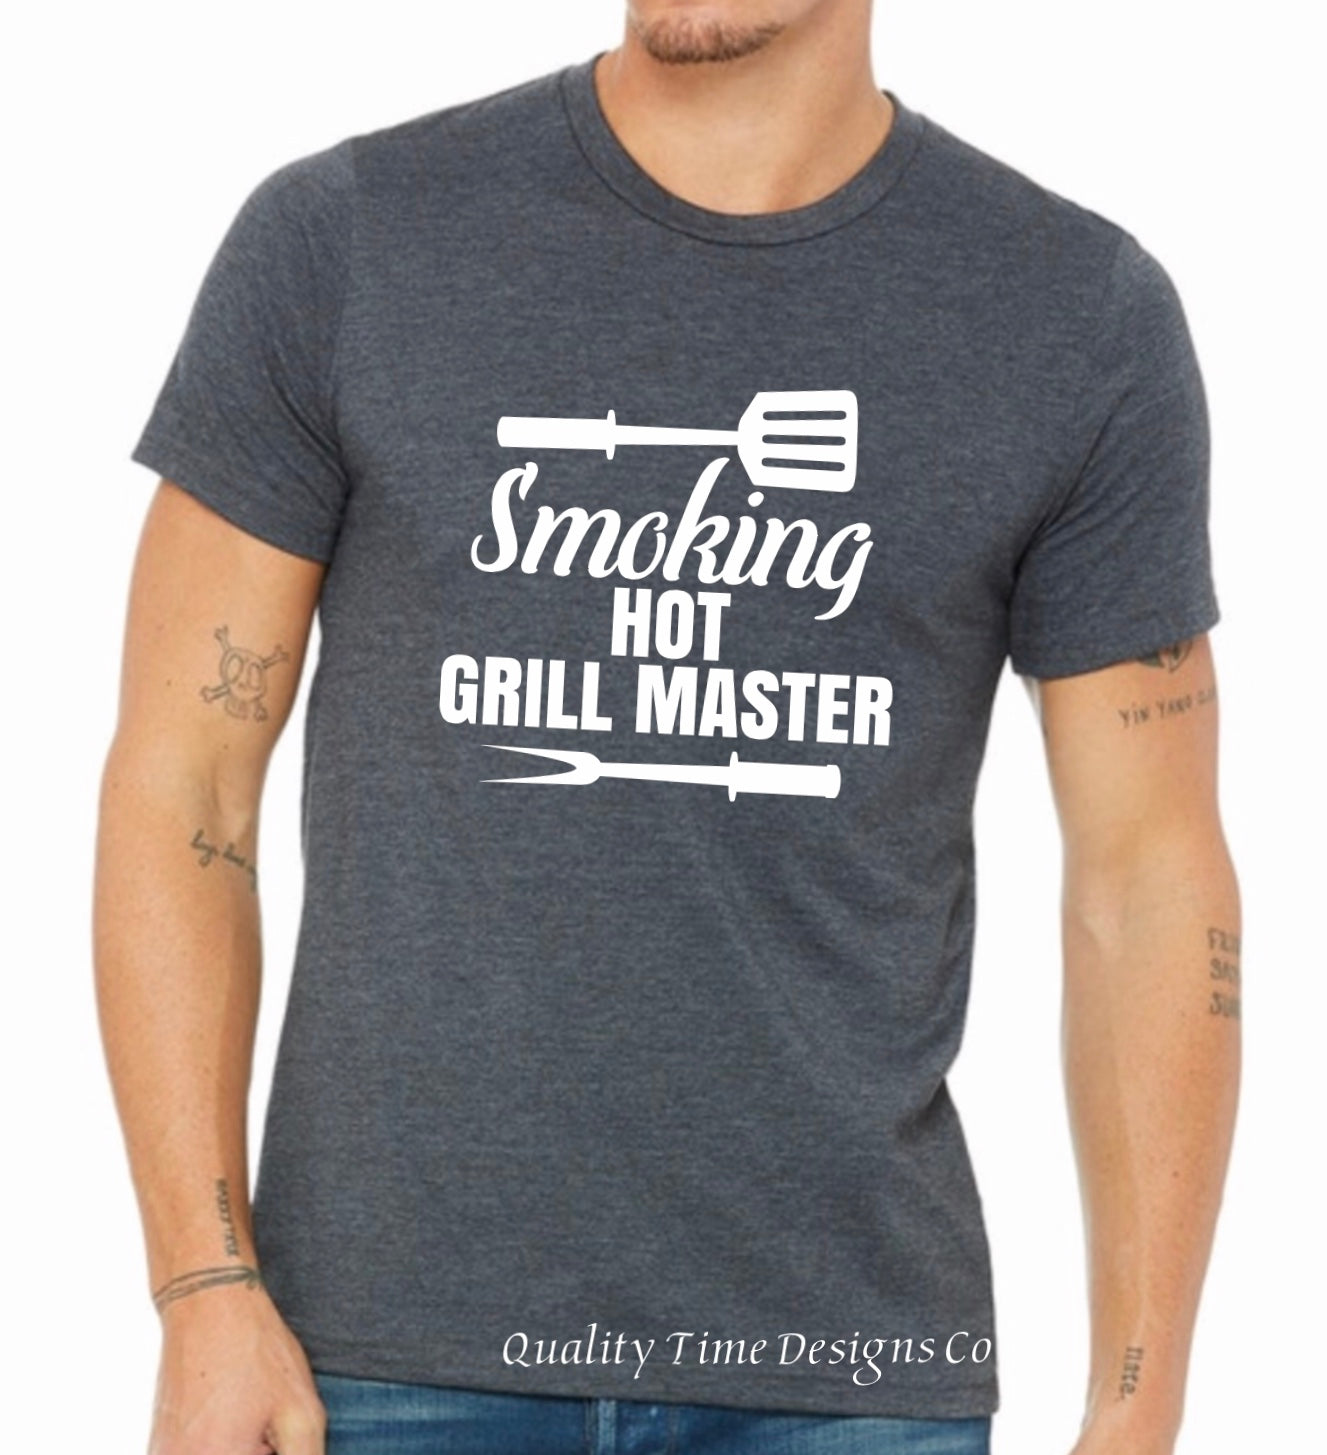 Smoking hot grill master t-shirt 